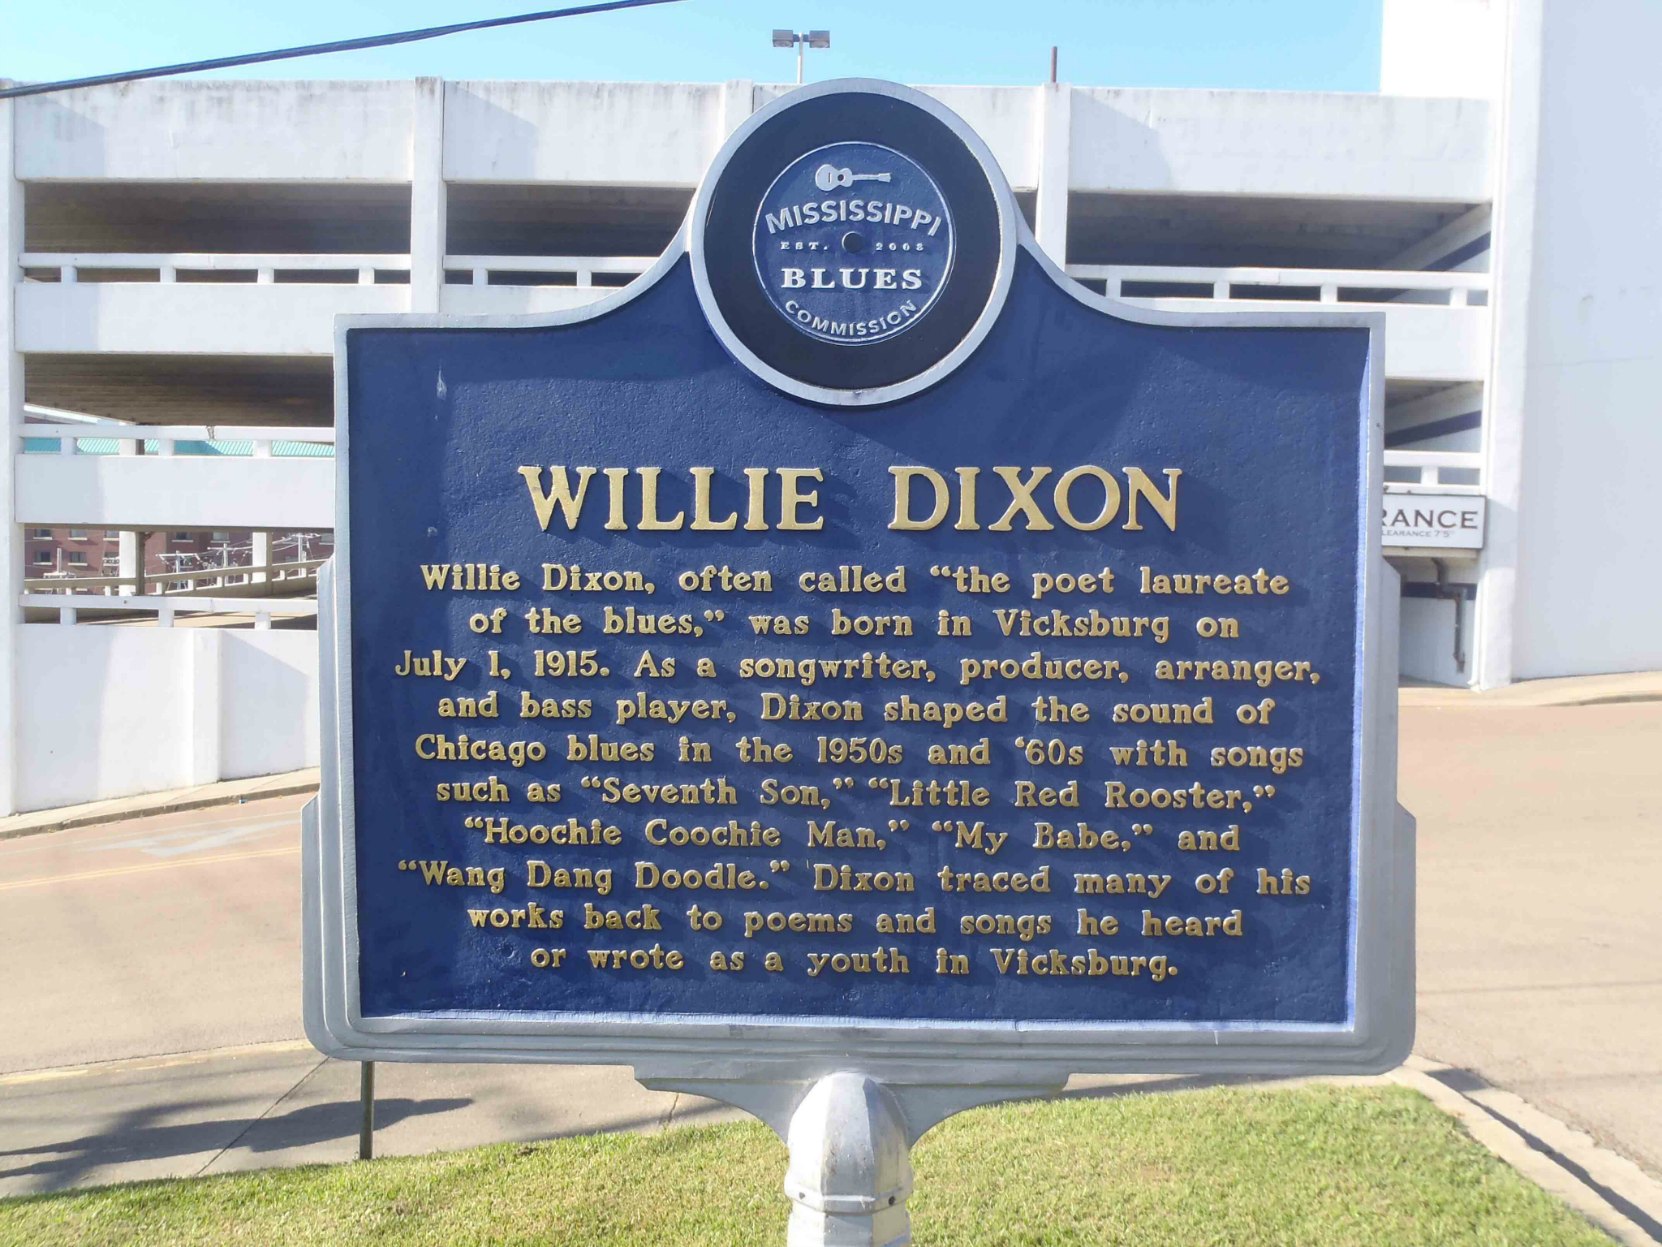 Mississippi Blues Trail marker for Willie Dixon, Vicksburg, Mississippi